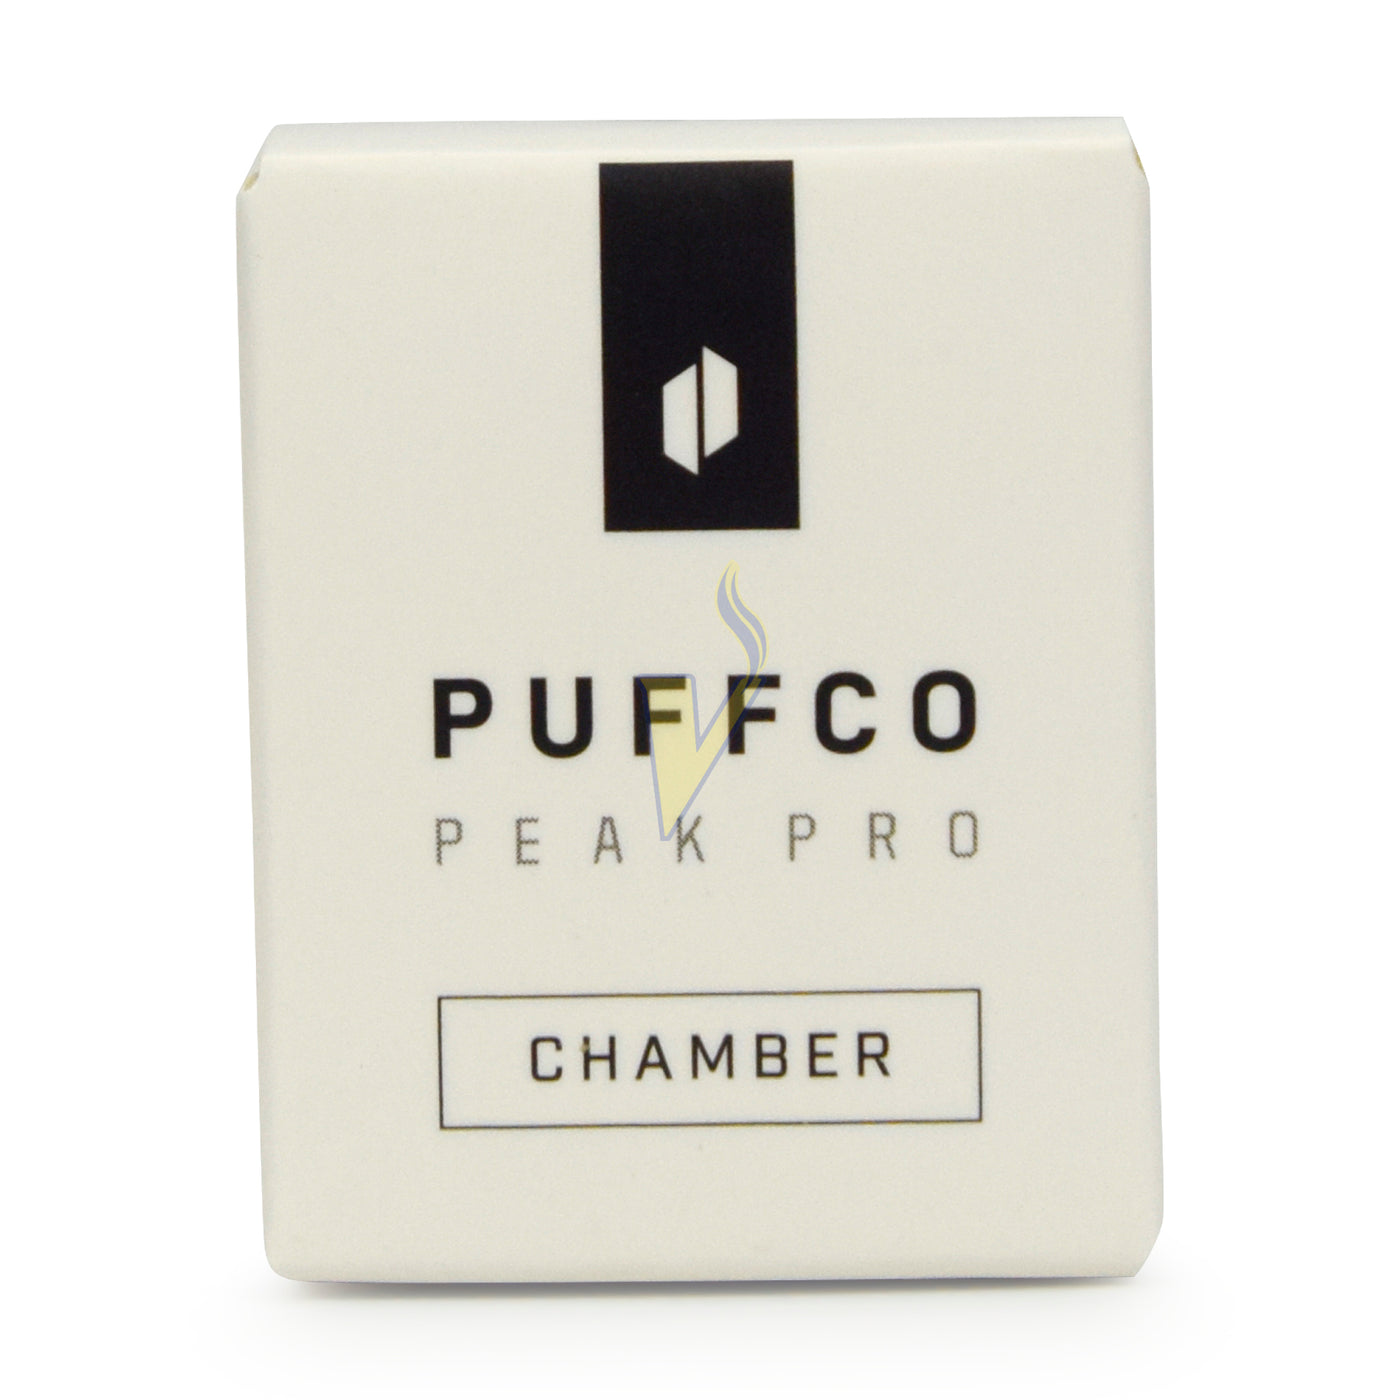 Puffco Peak Pro Replacement Coil